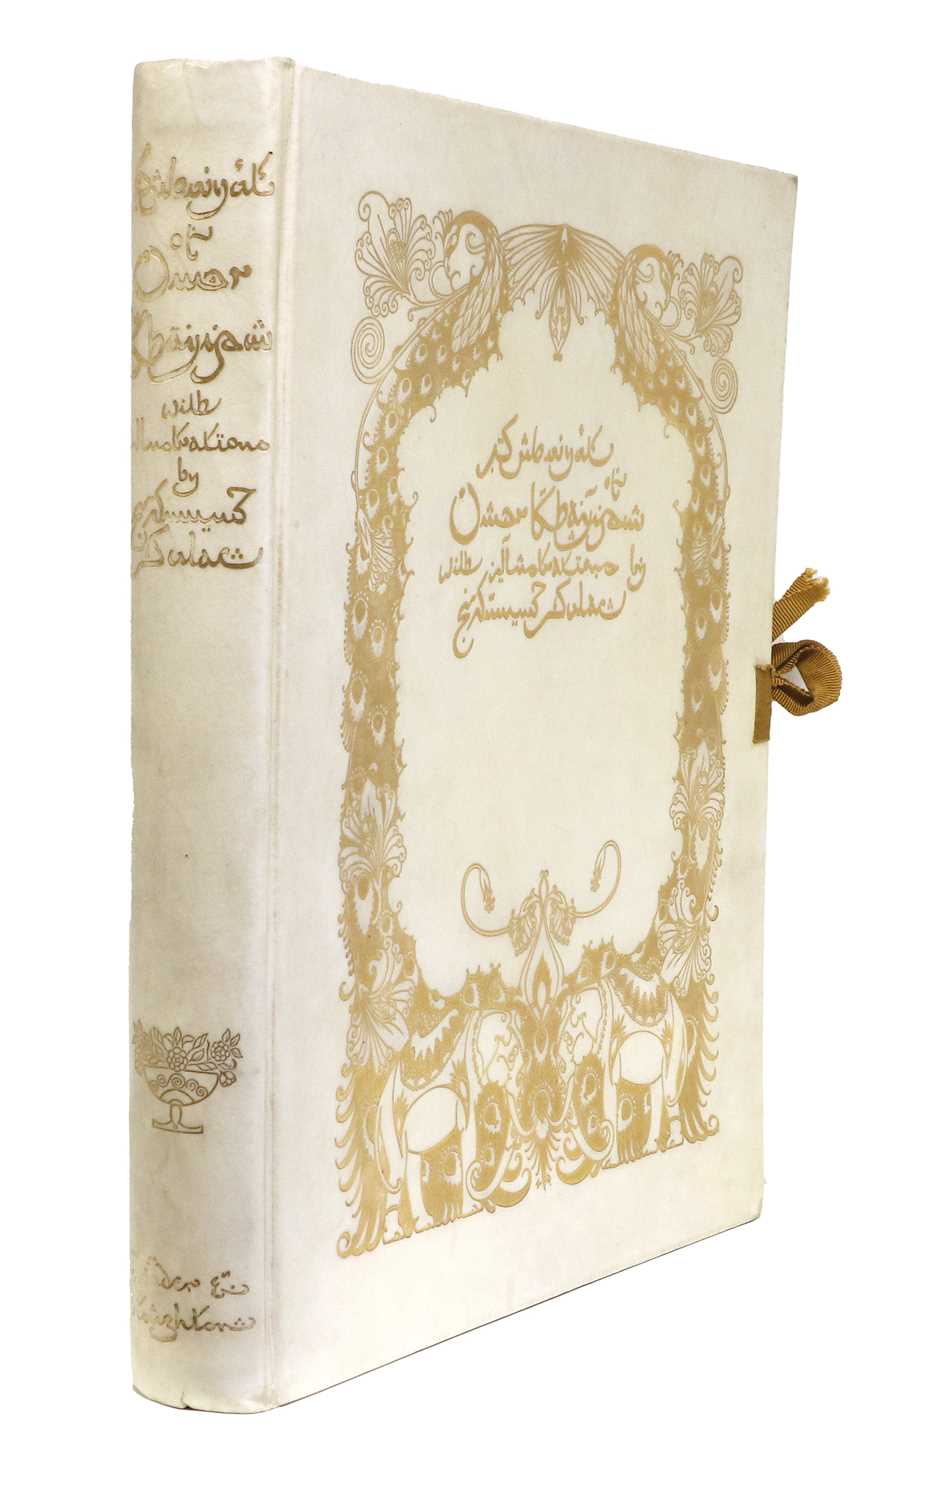 Fitzgerald (Edward) transl. Rubaiyat of Omar Khayyam. With Illustrations by Edmund Dulac. Hodder and